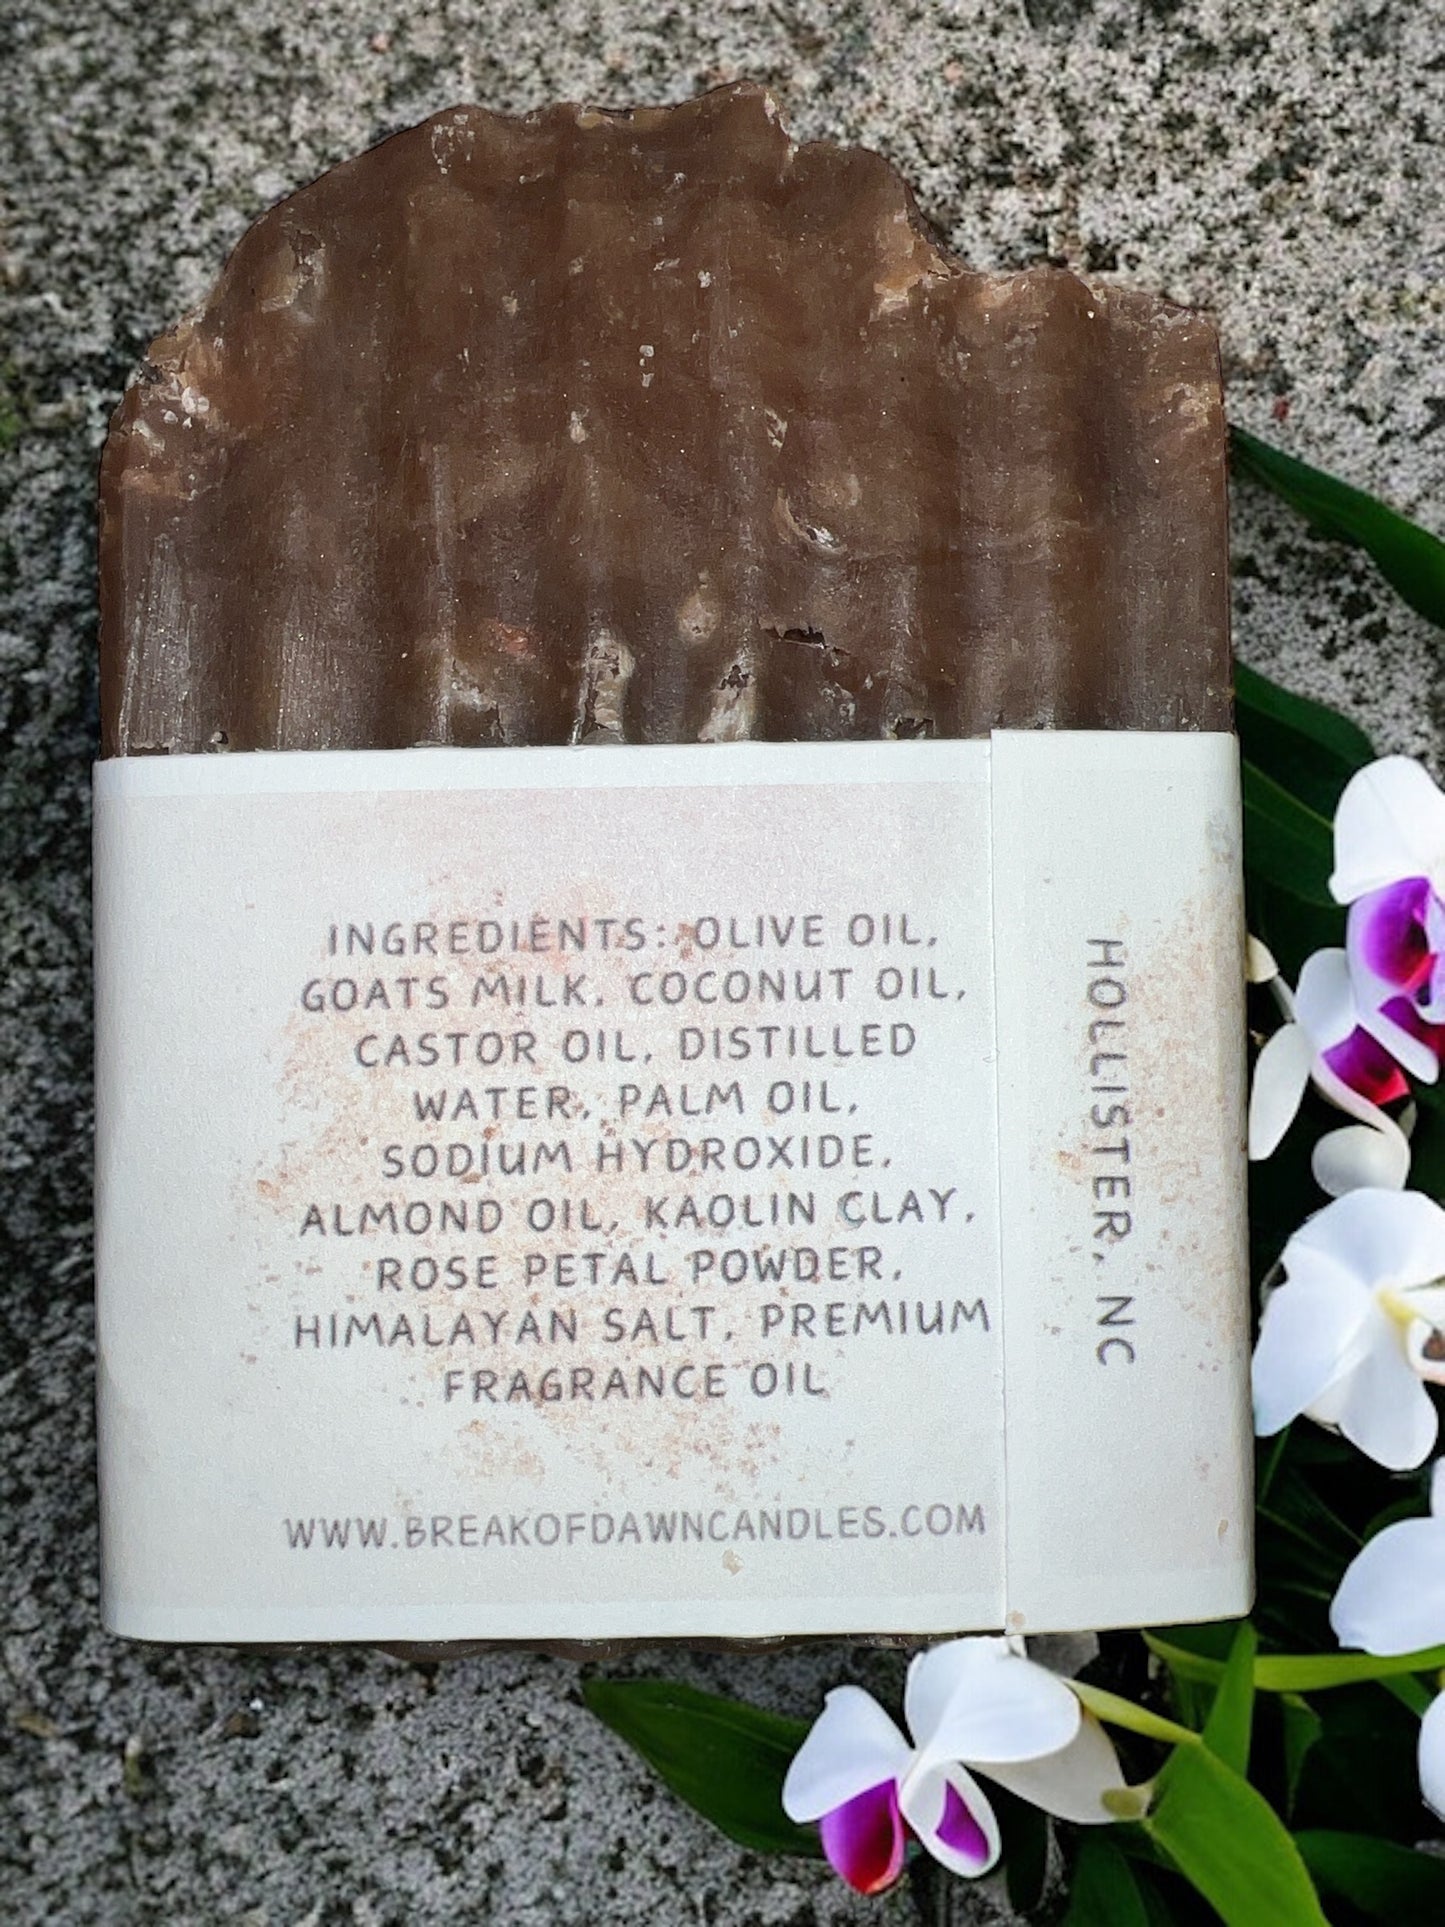 Sea Salt & Orchid Soap